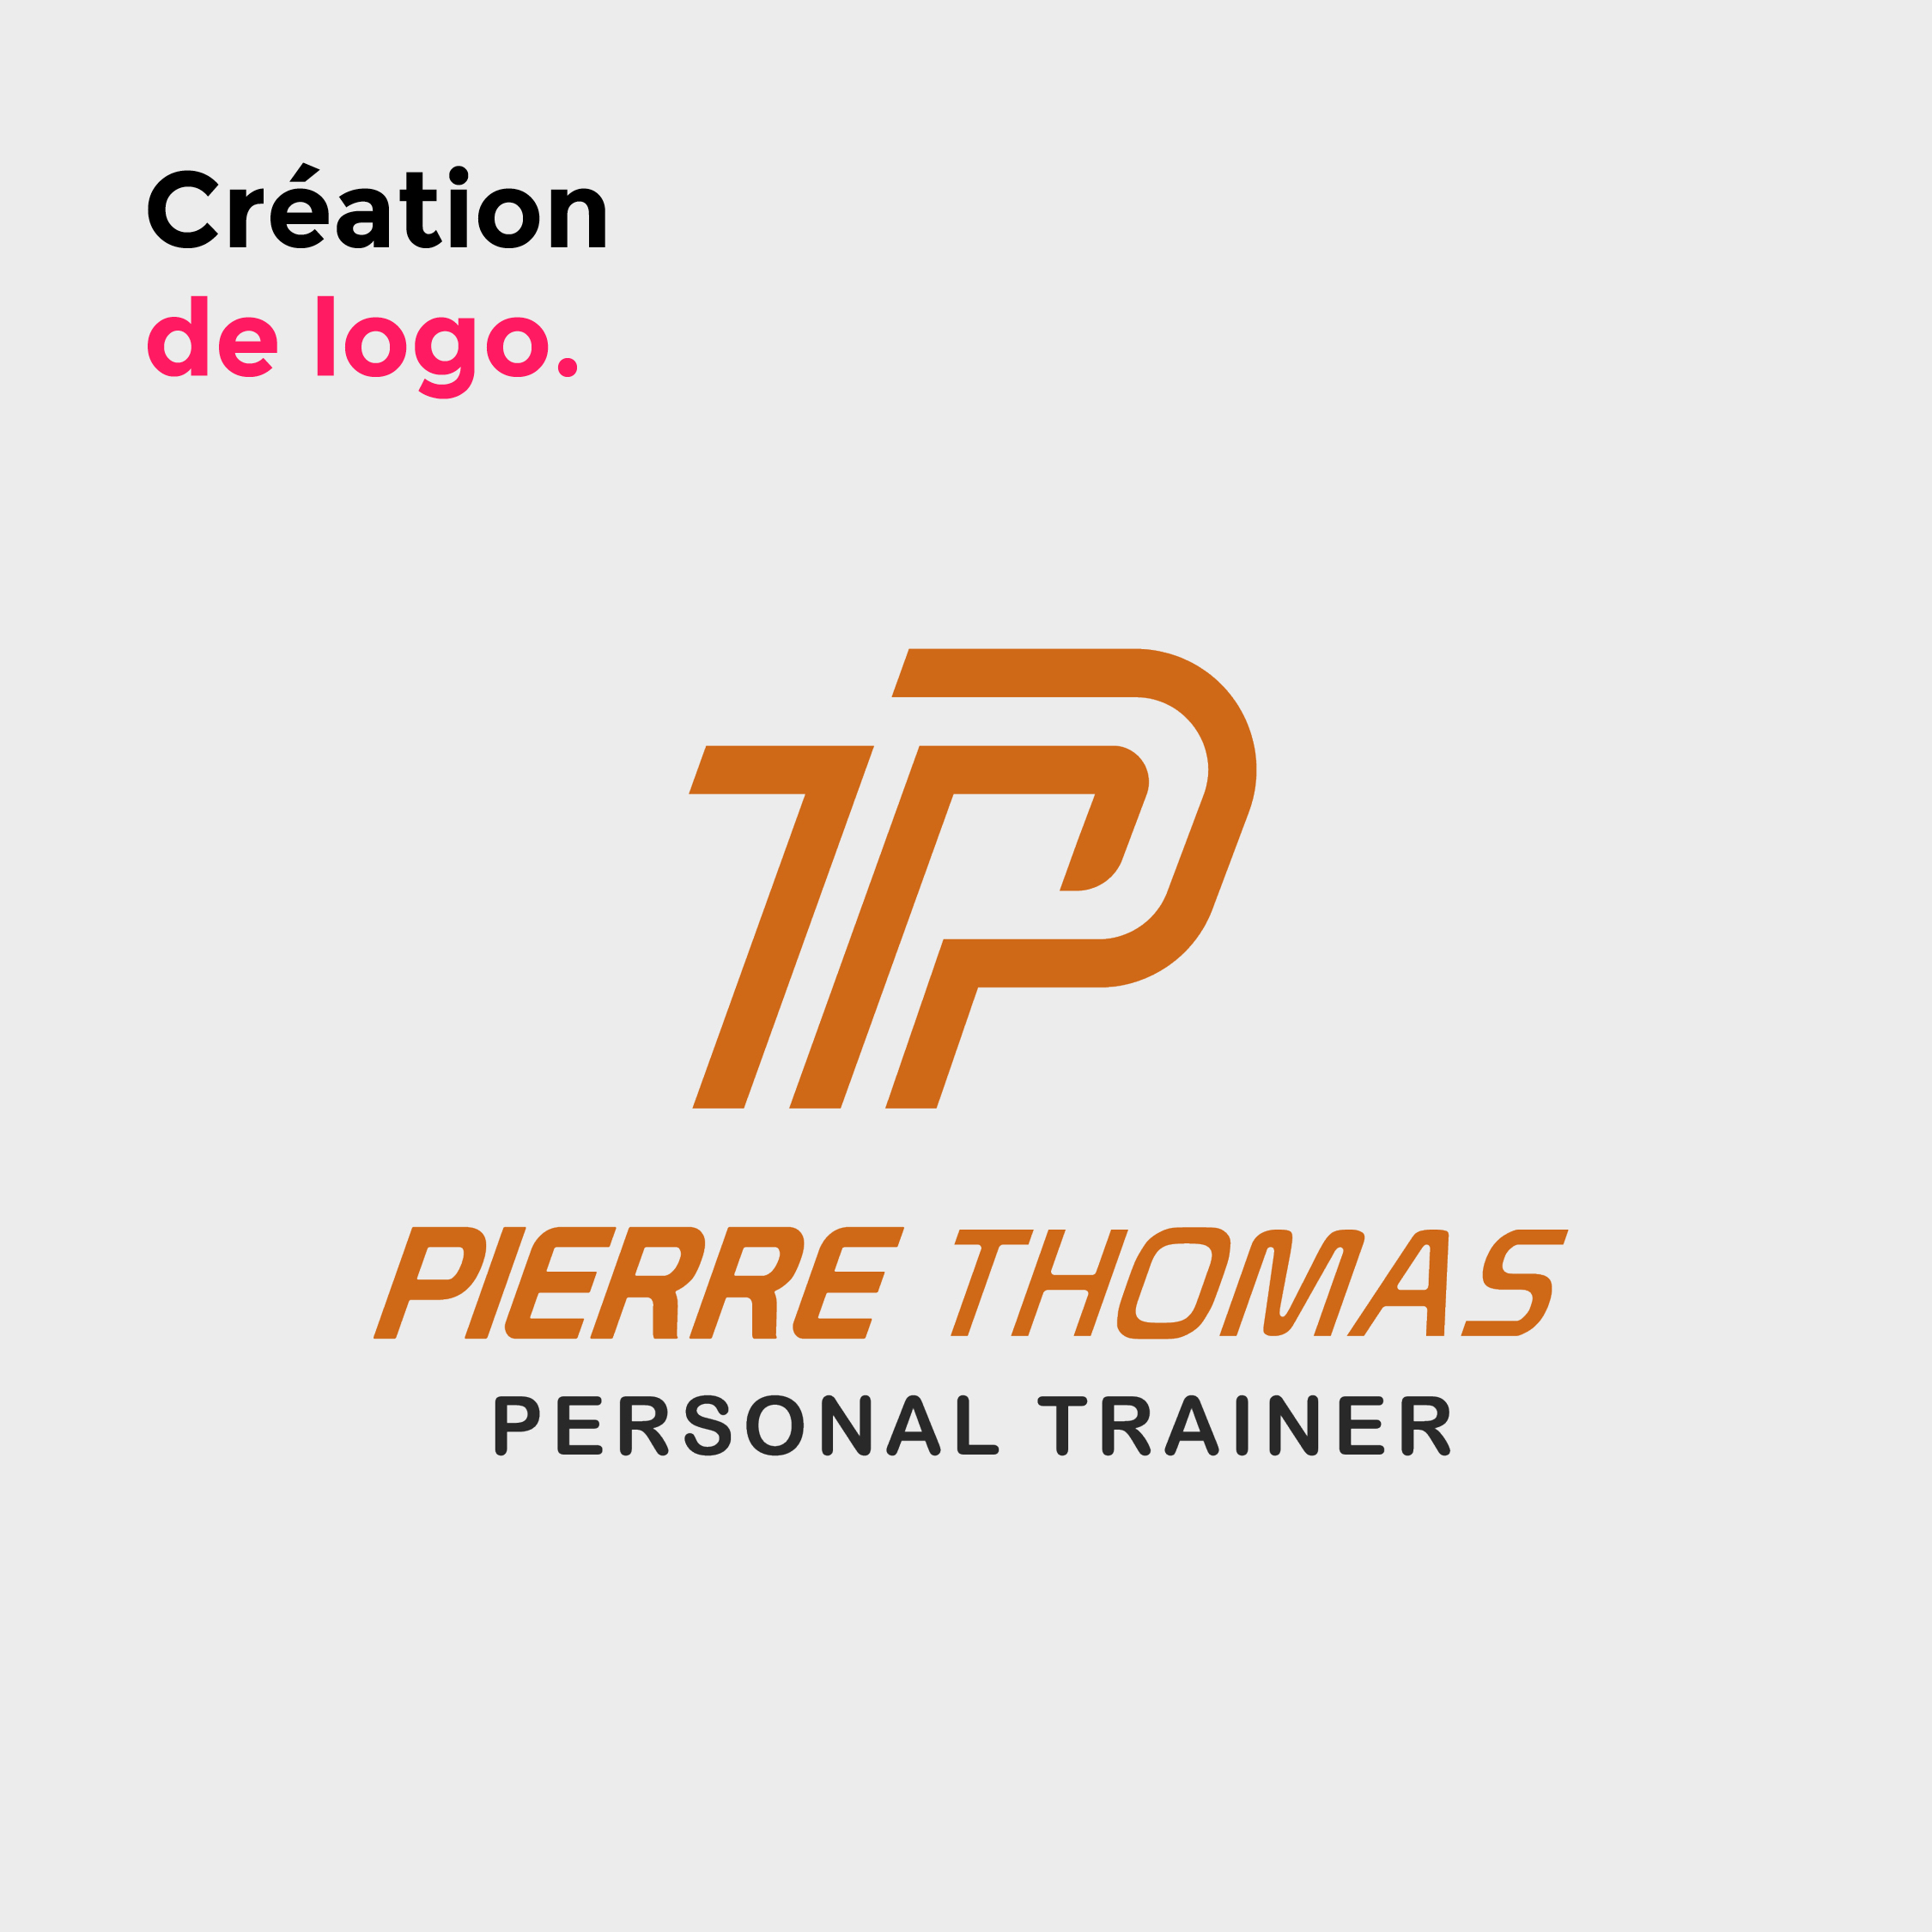 carre-gris-creation-logo-pierre-thomas-gris-orange